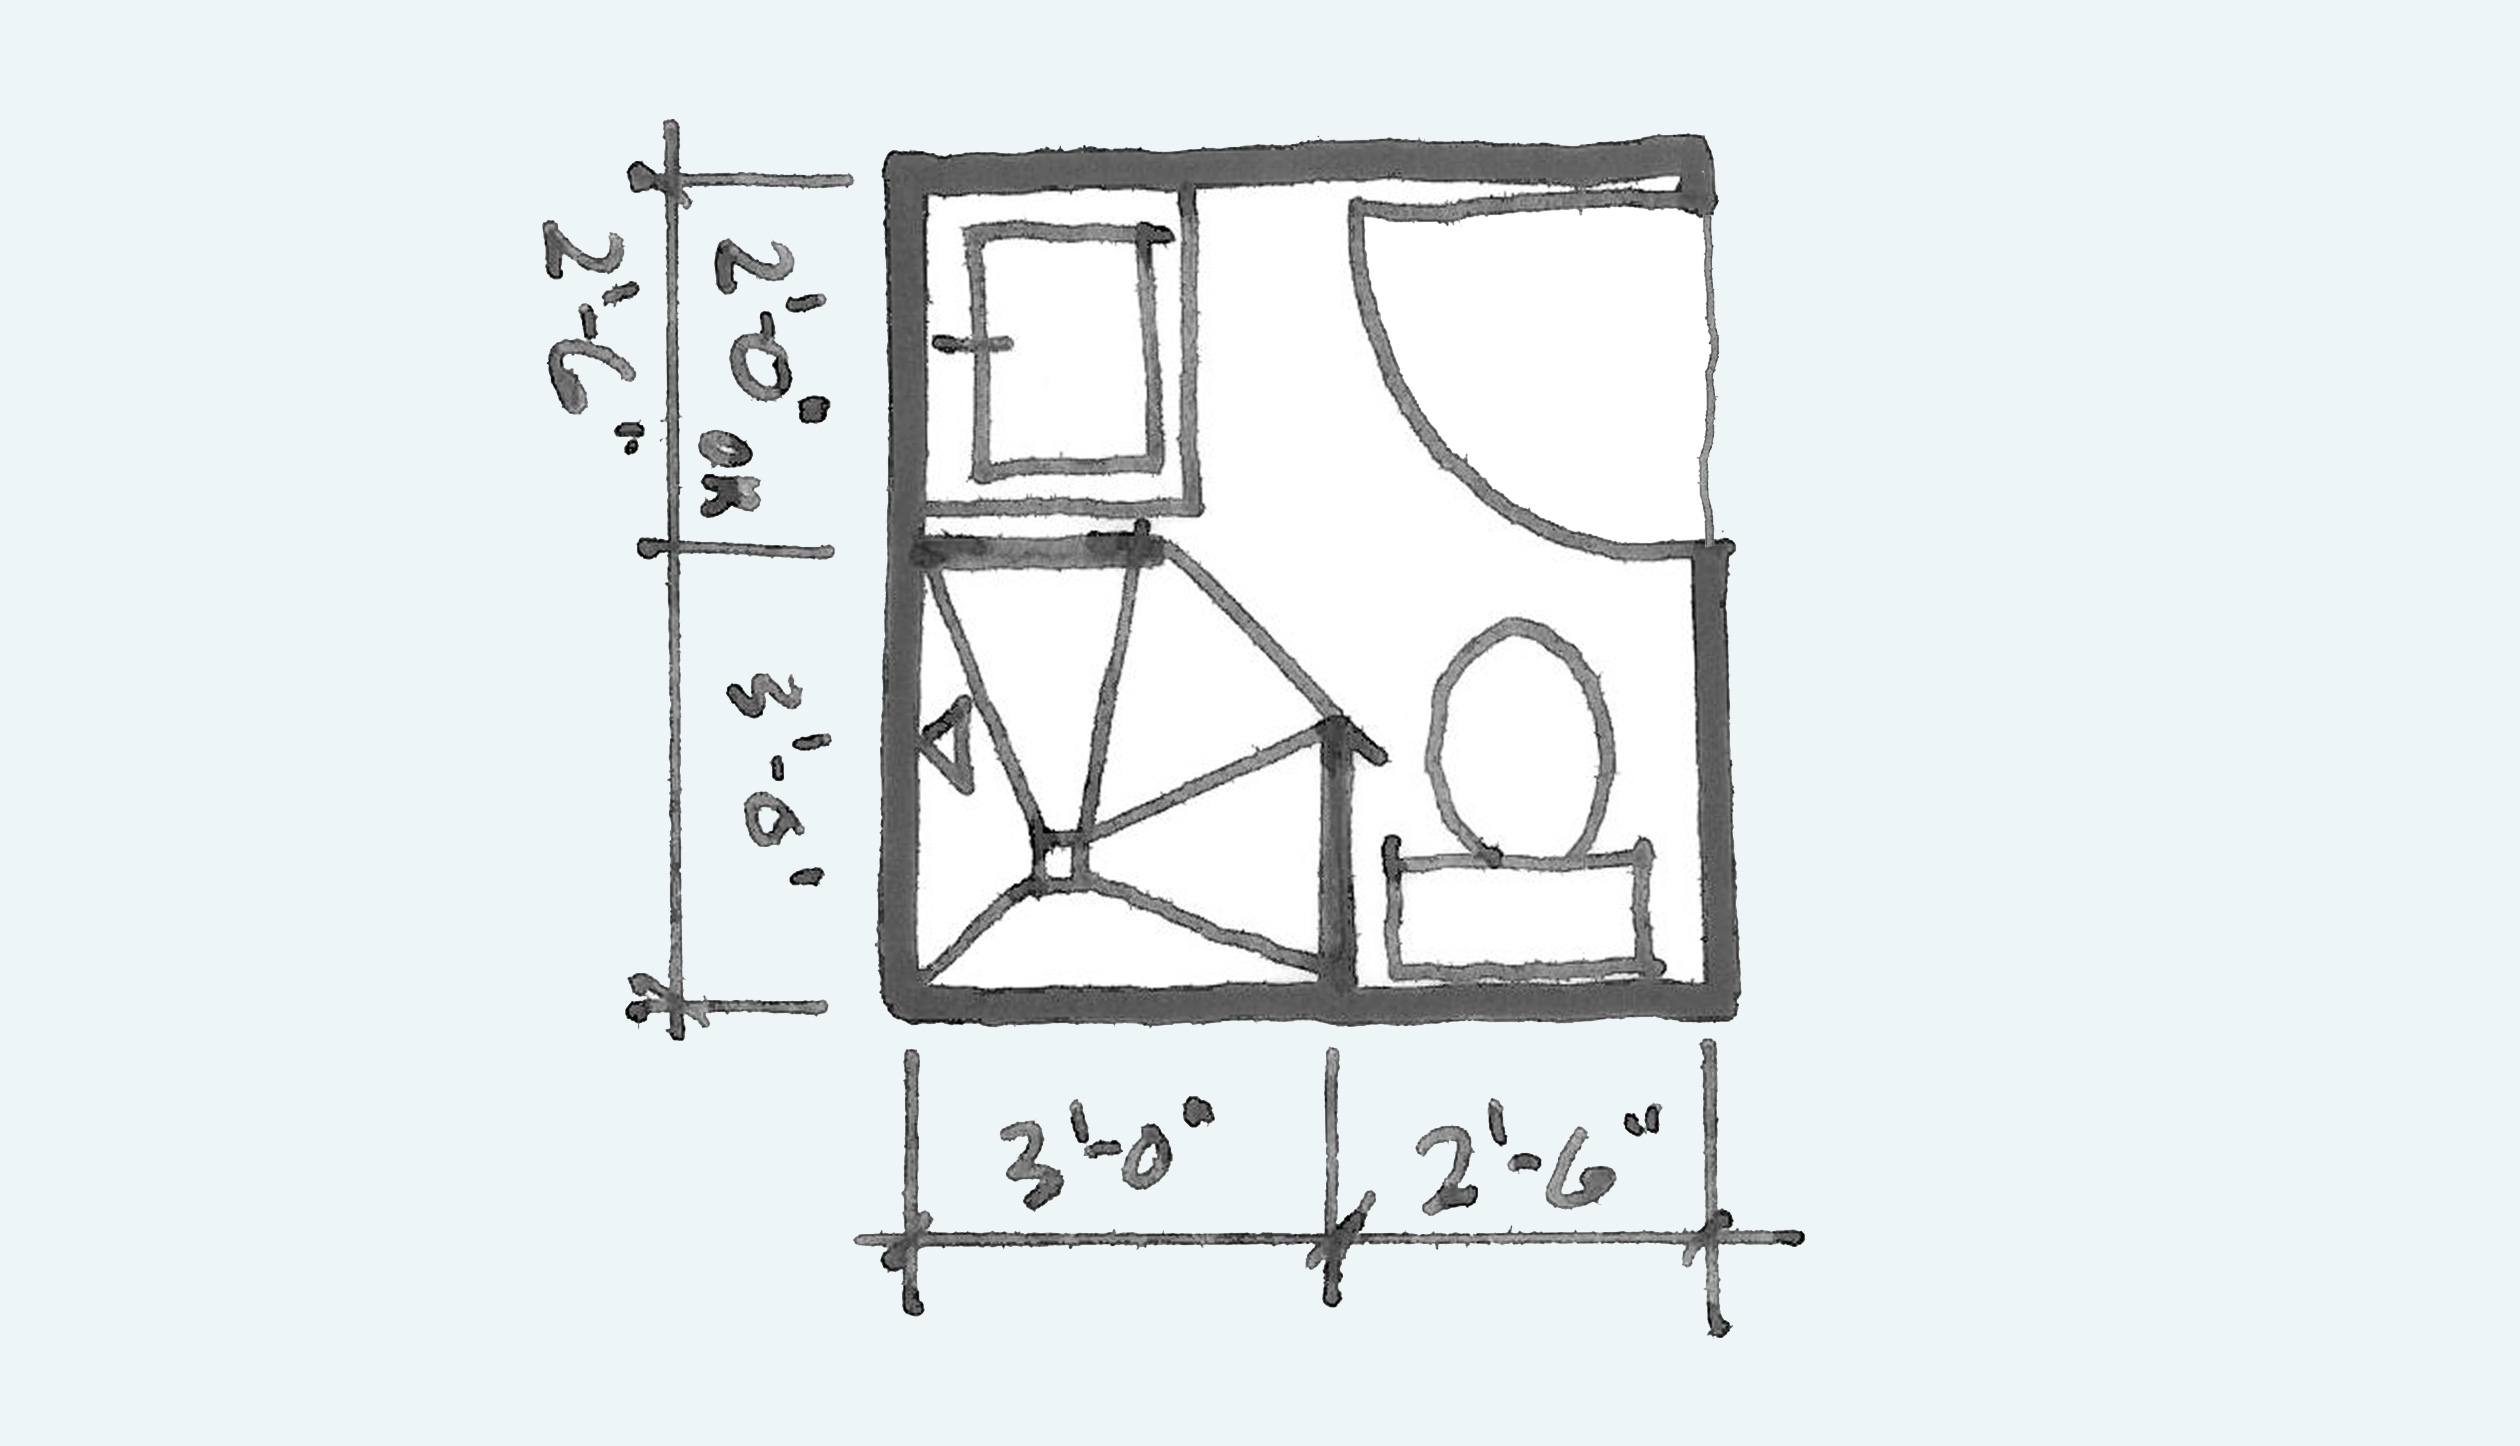 small narrow bathroom floor plans